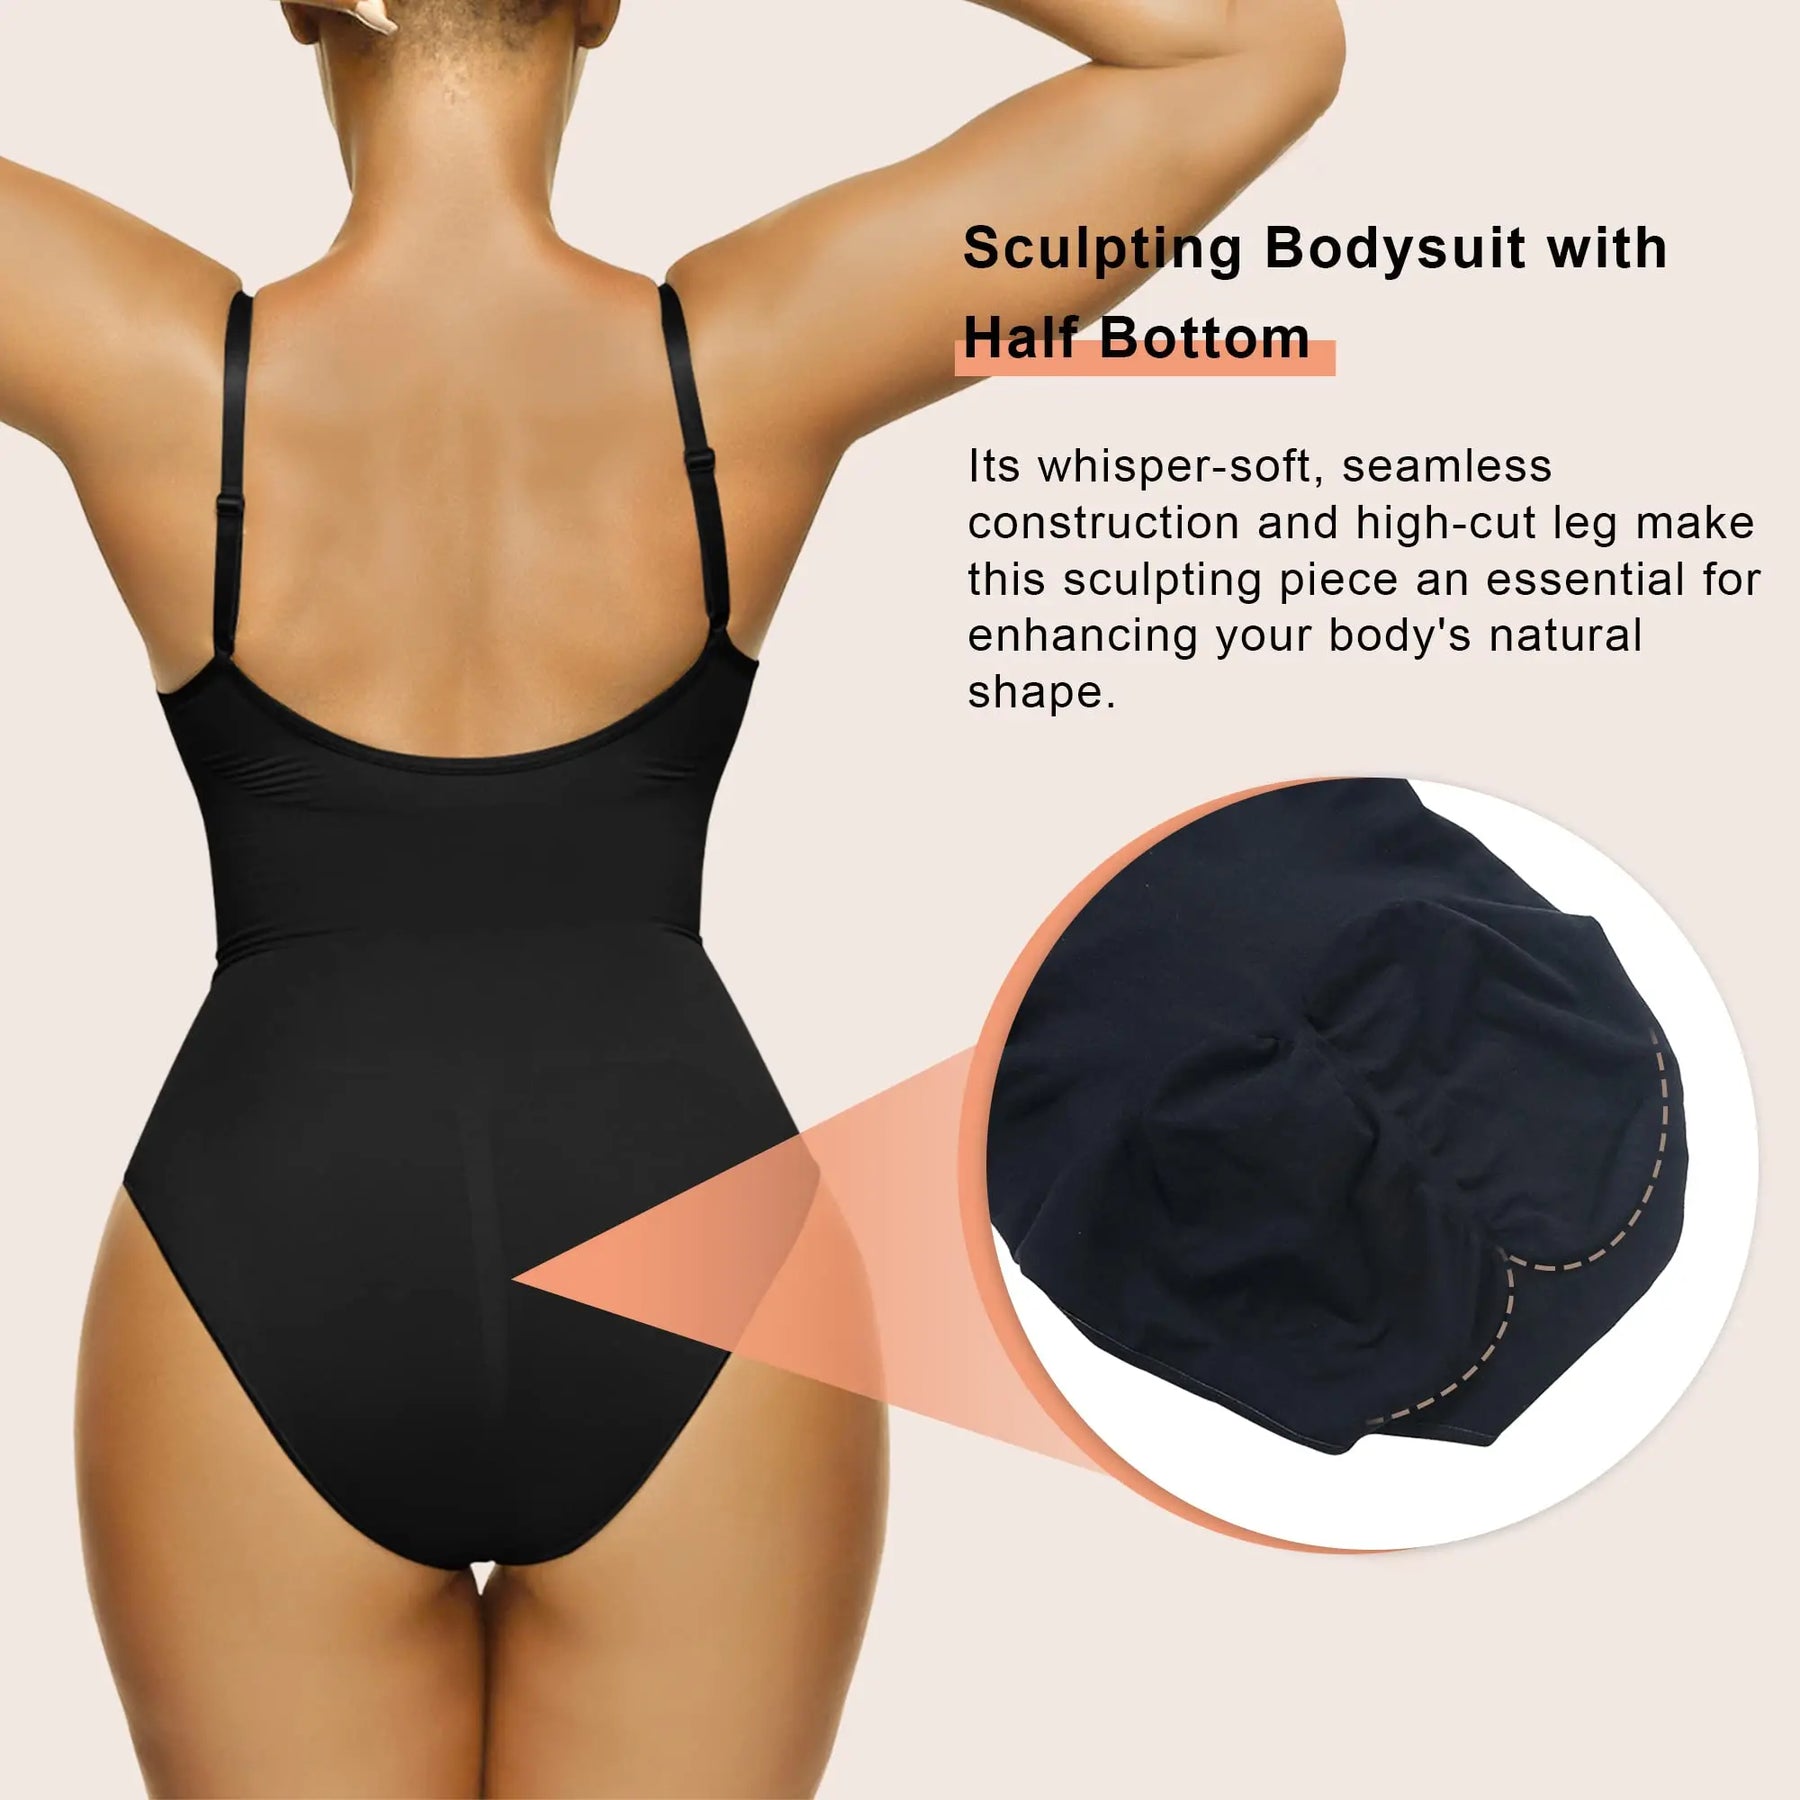 SHAPERX Shapewear for Women Tummy Control Bodysuit Mid Thigh Butt Lifter  Body Shaper Shorts